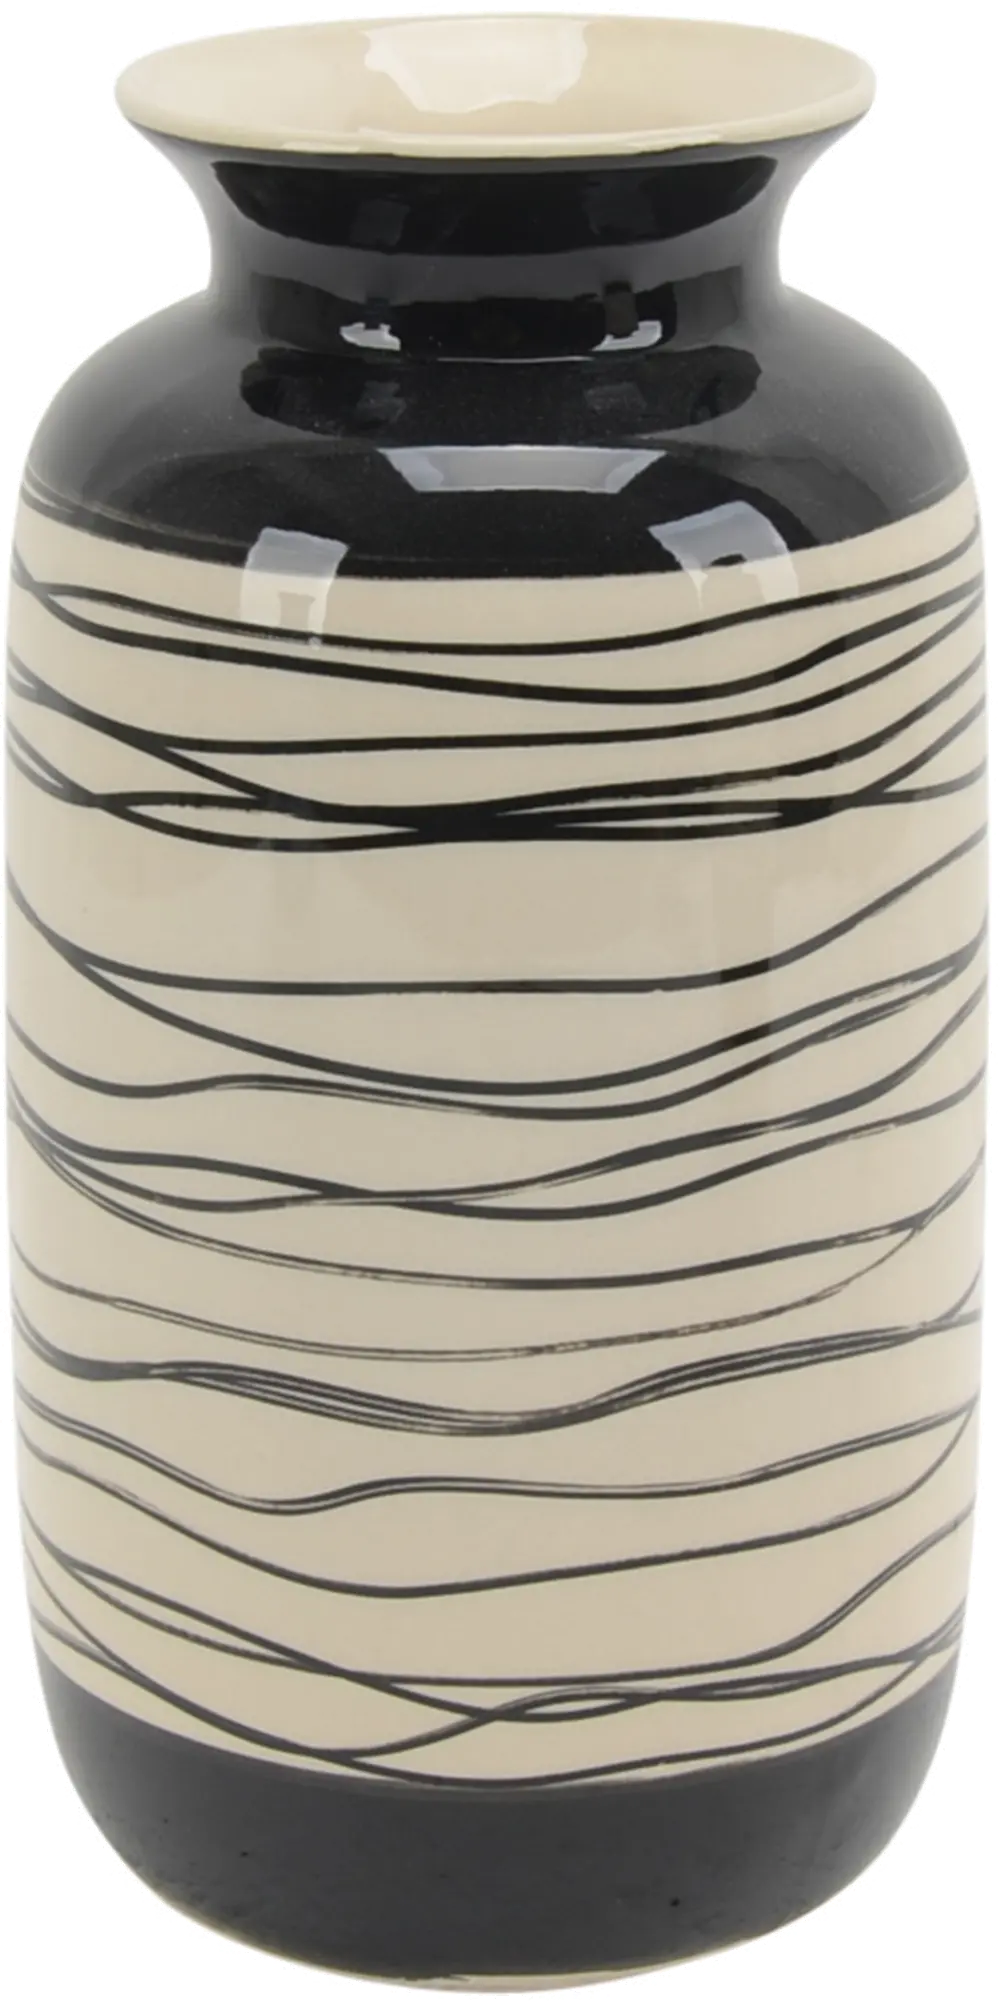 10 Inch Black and White Swirl Ceramic Vase-1